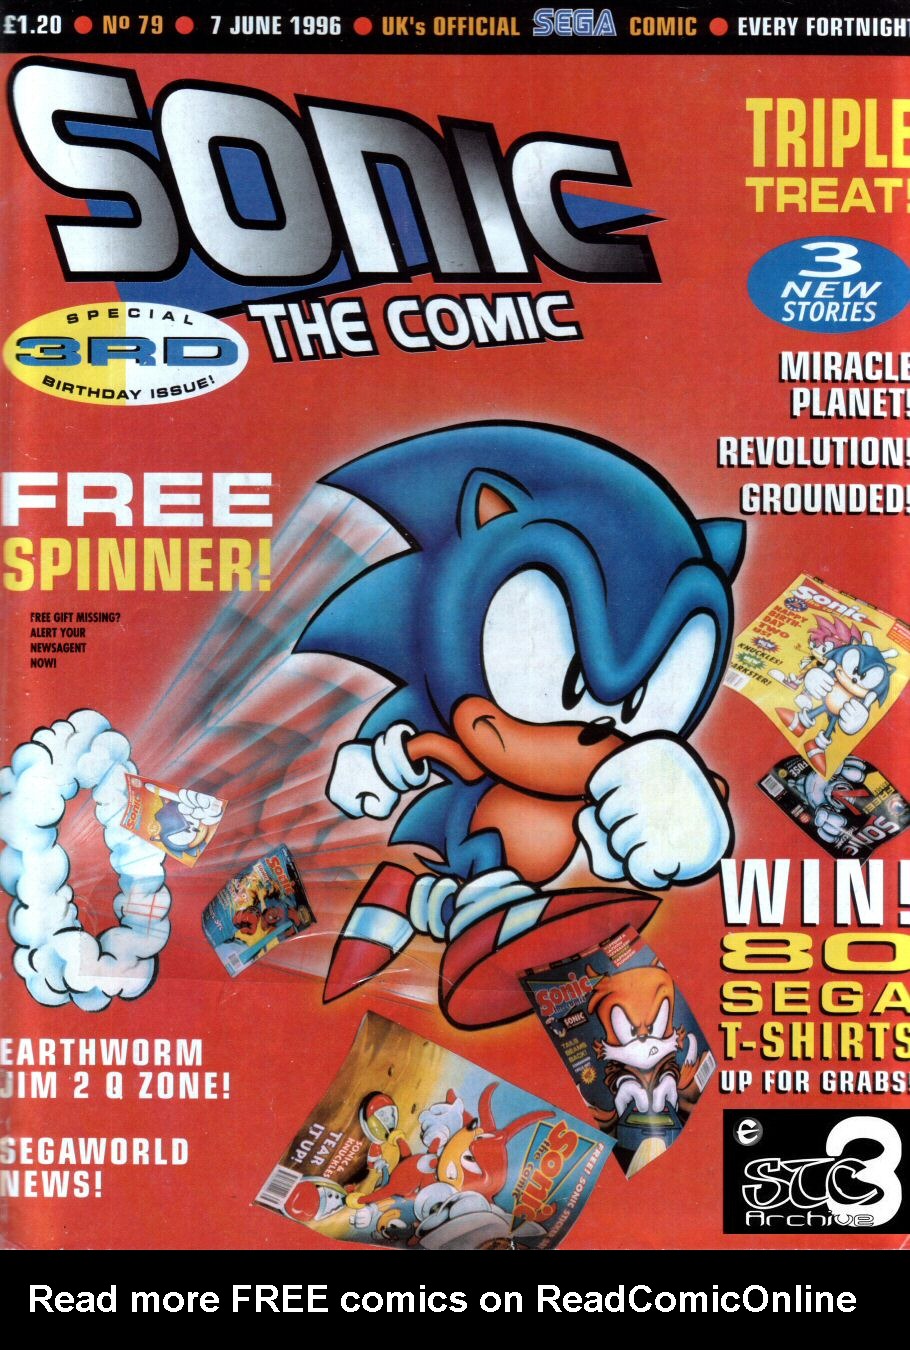 Fleetway Sonic the Comic 203 - Read Sonic the Comic Online